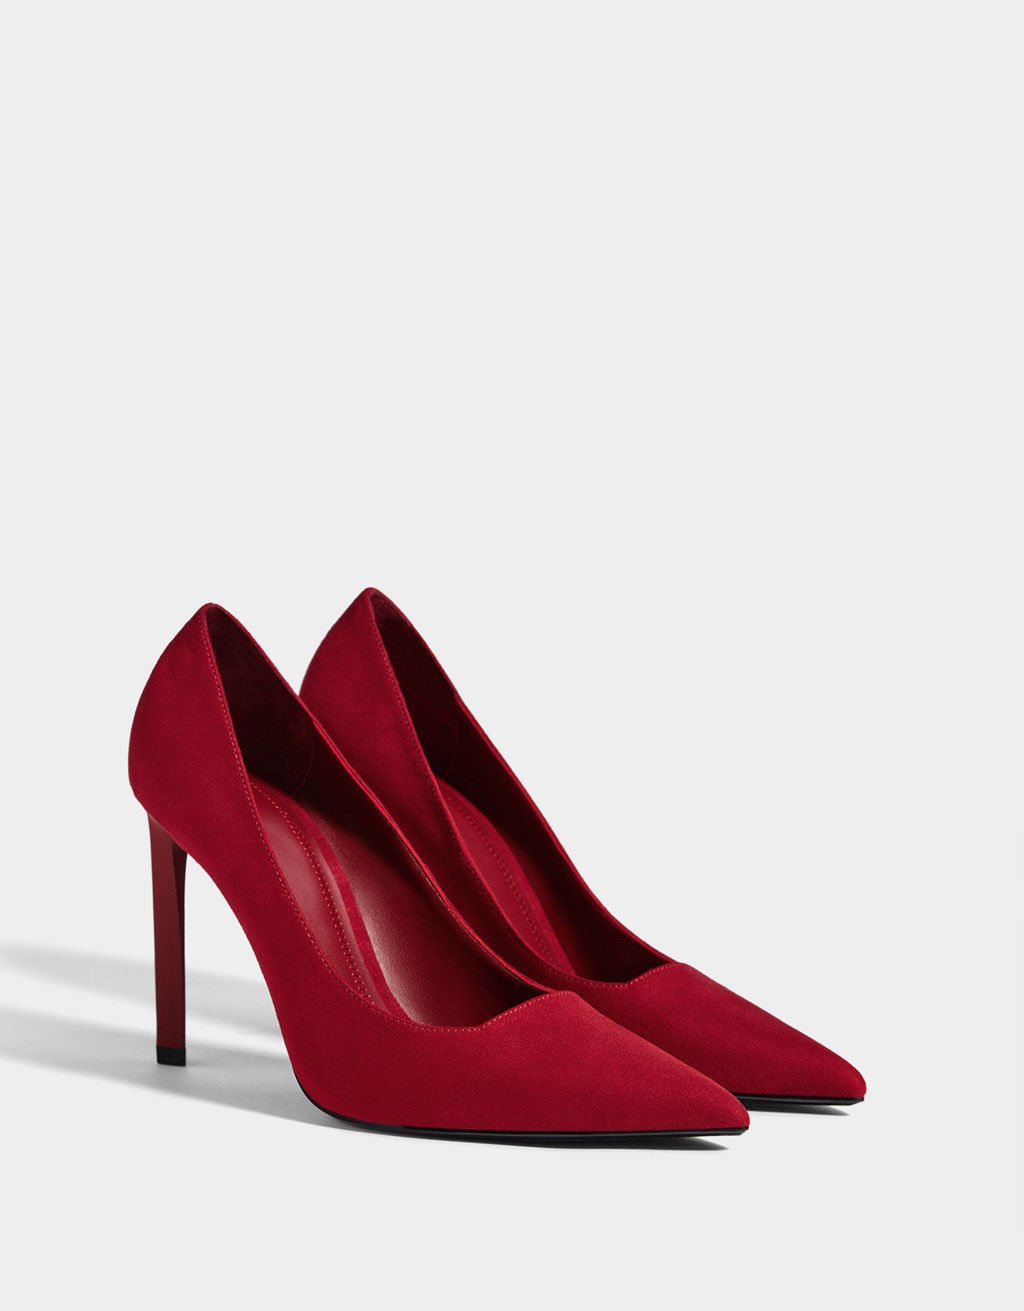 bershka red shoes